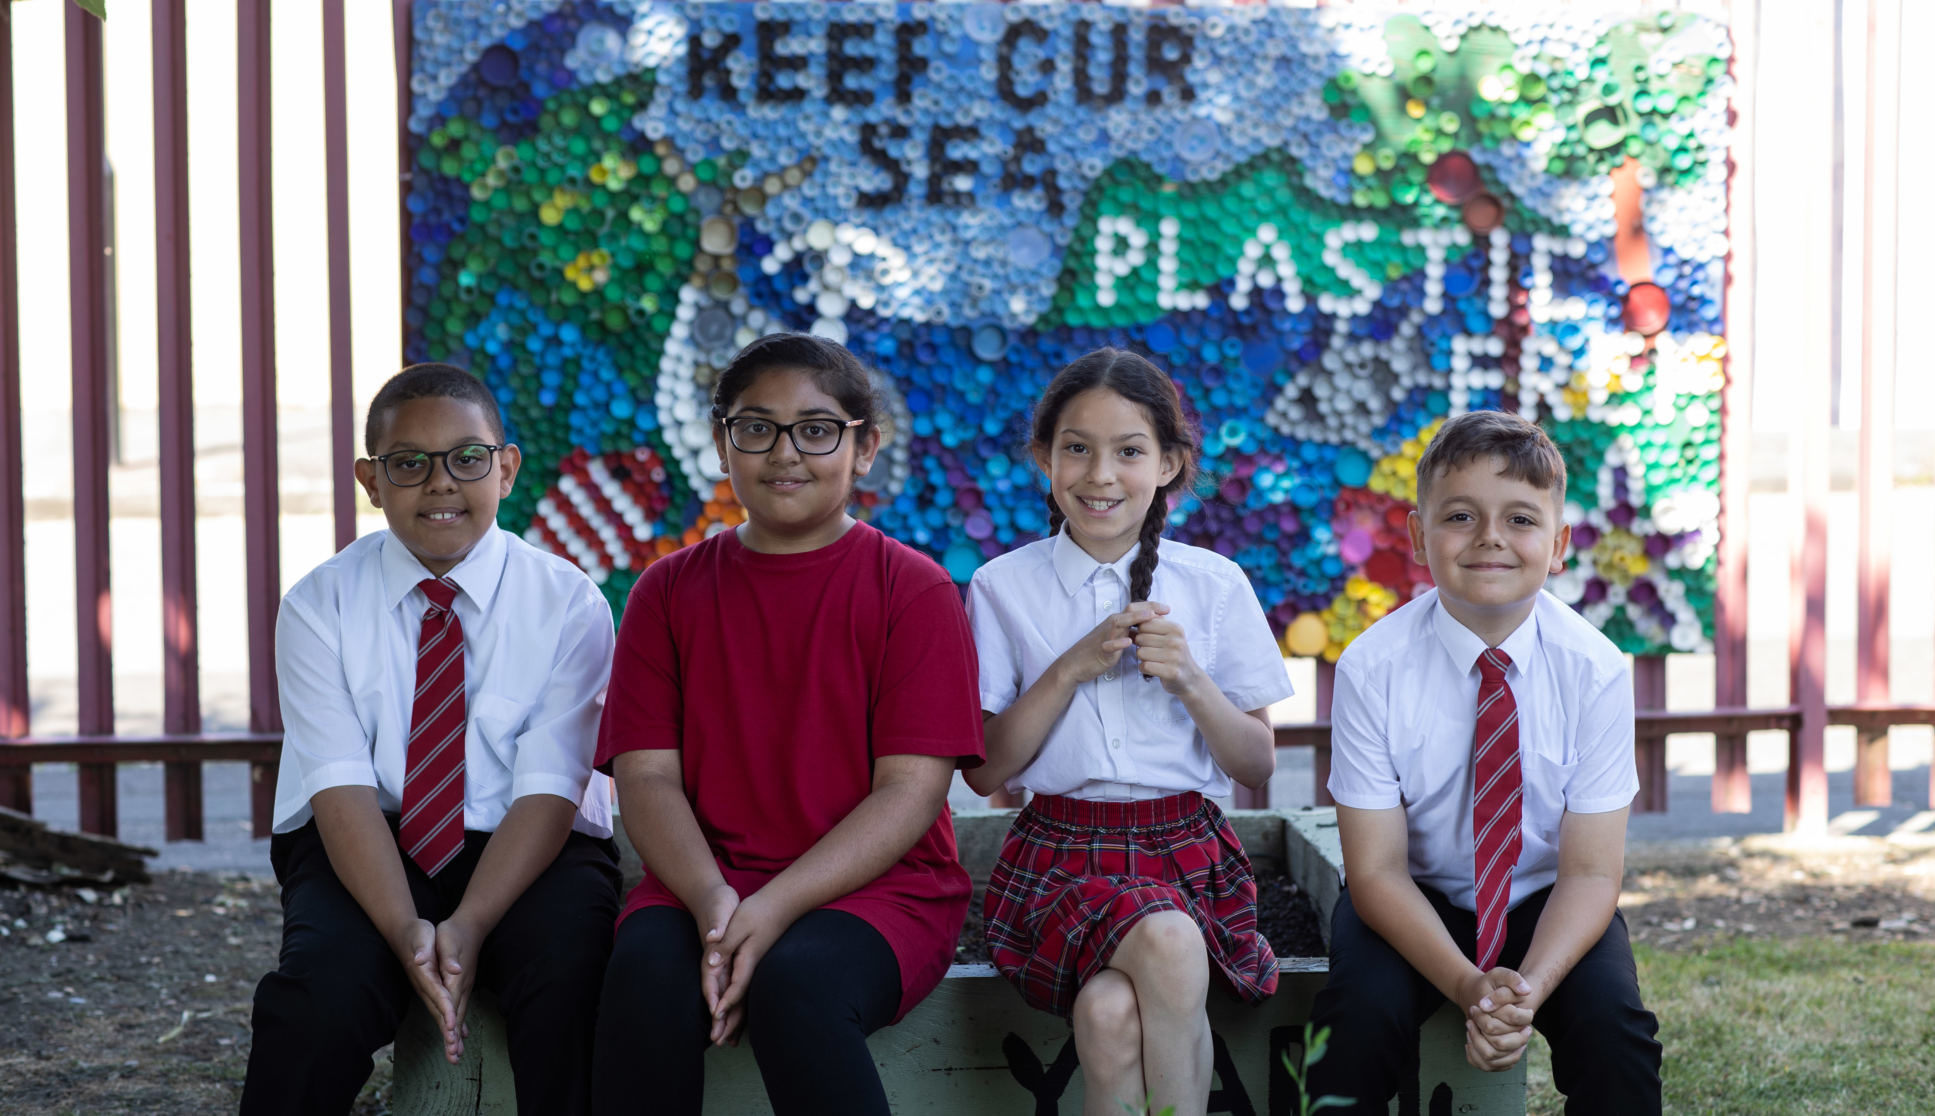 Phoenix School awarded Silver Rights Aware Award from UNICEF UK - Cygnet